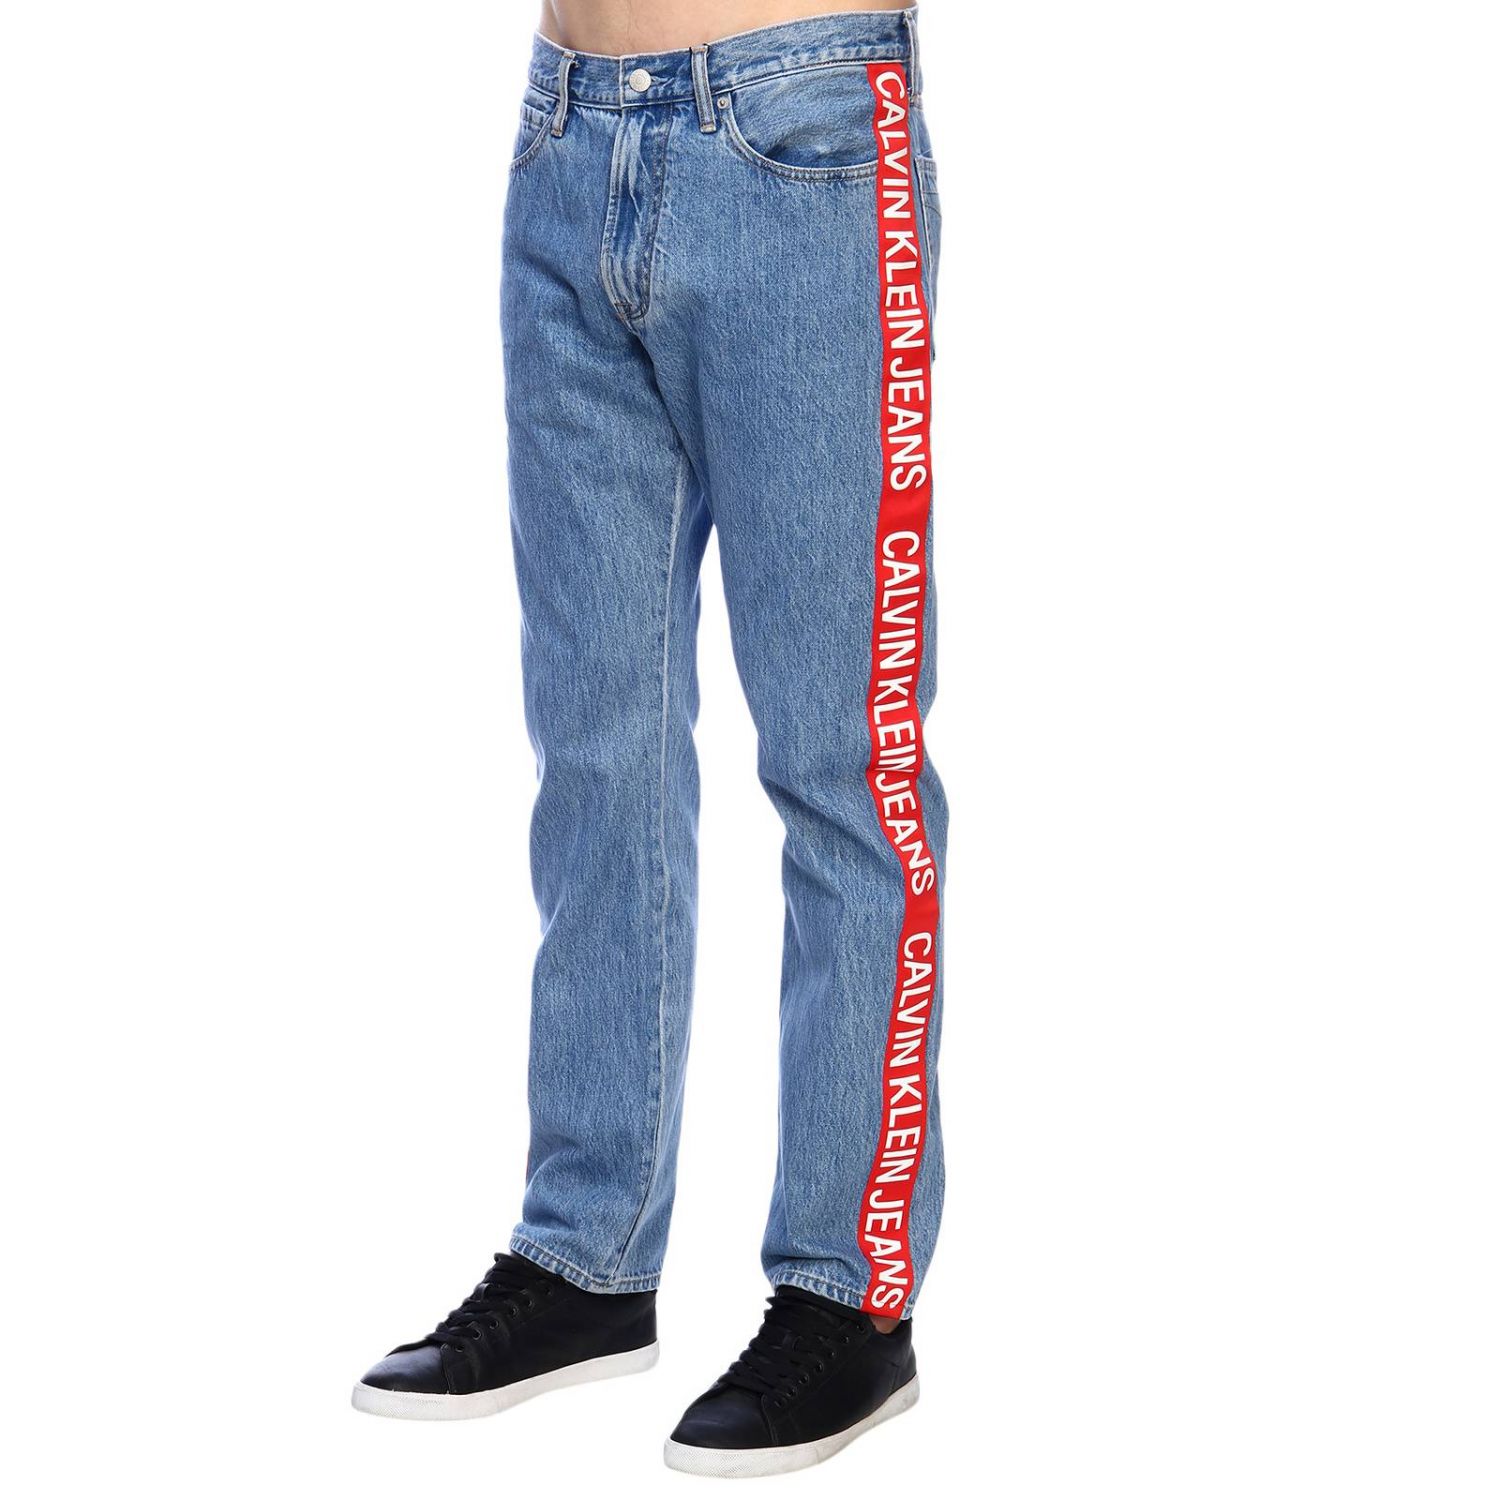 jaqueta jeans masculina azul claro